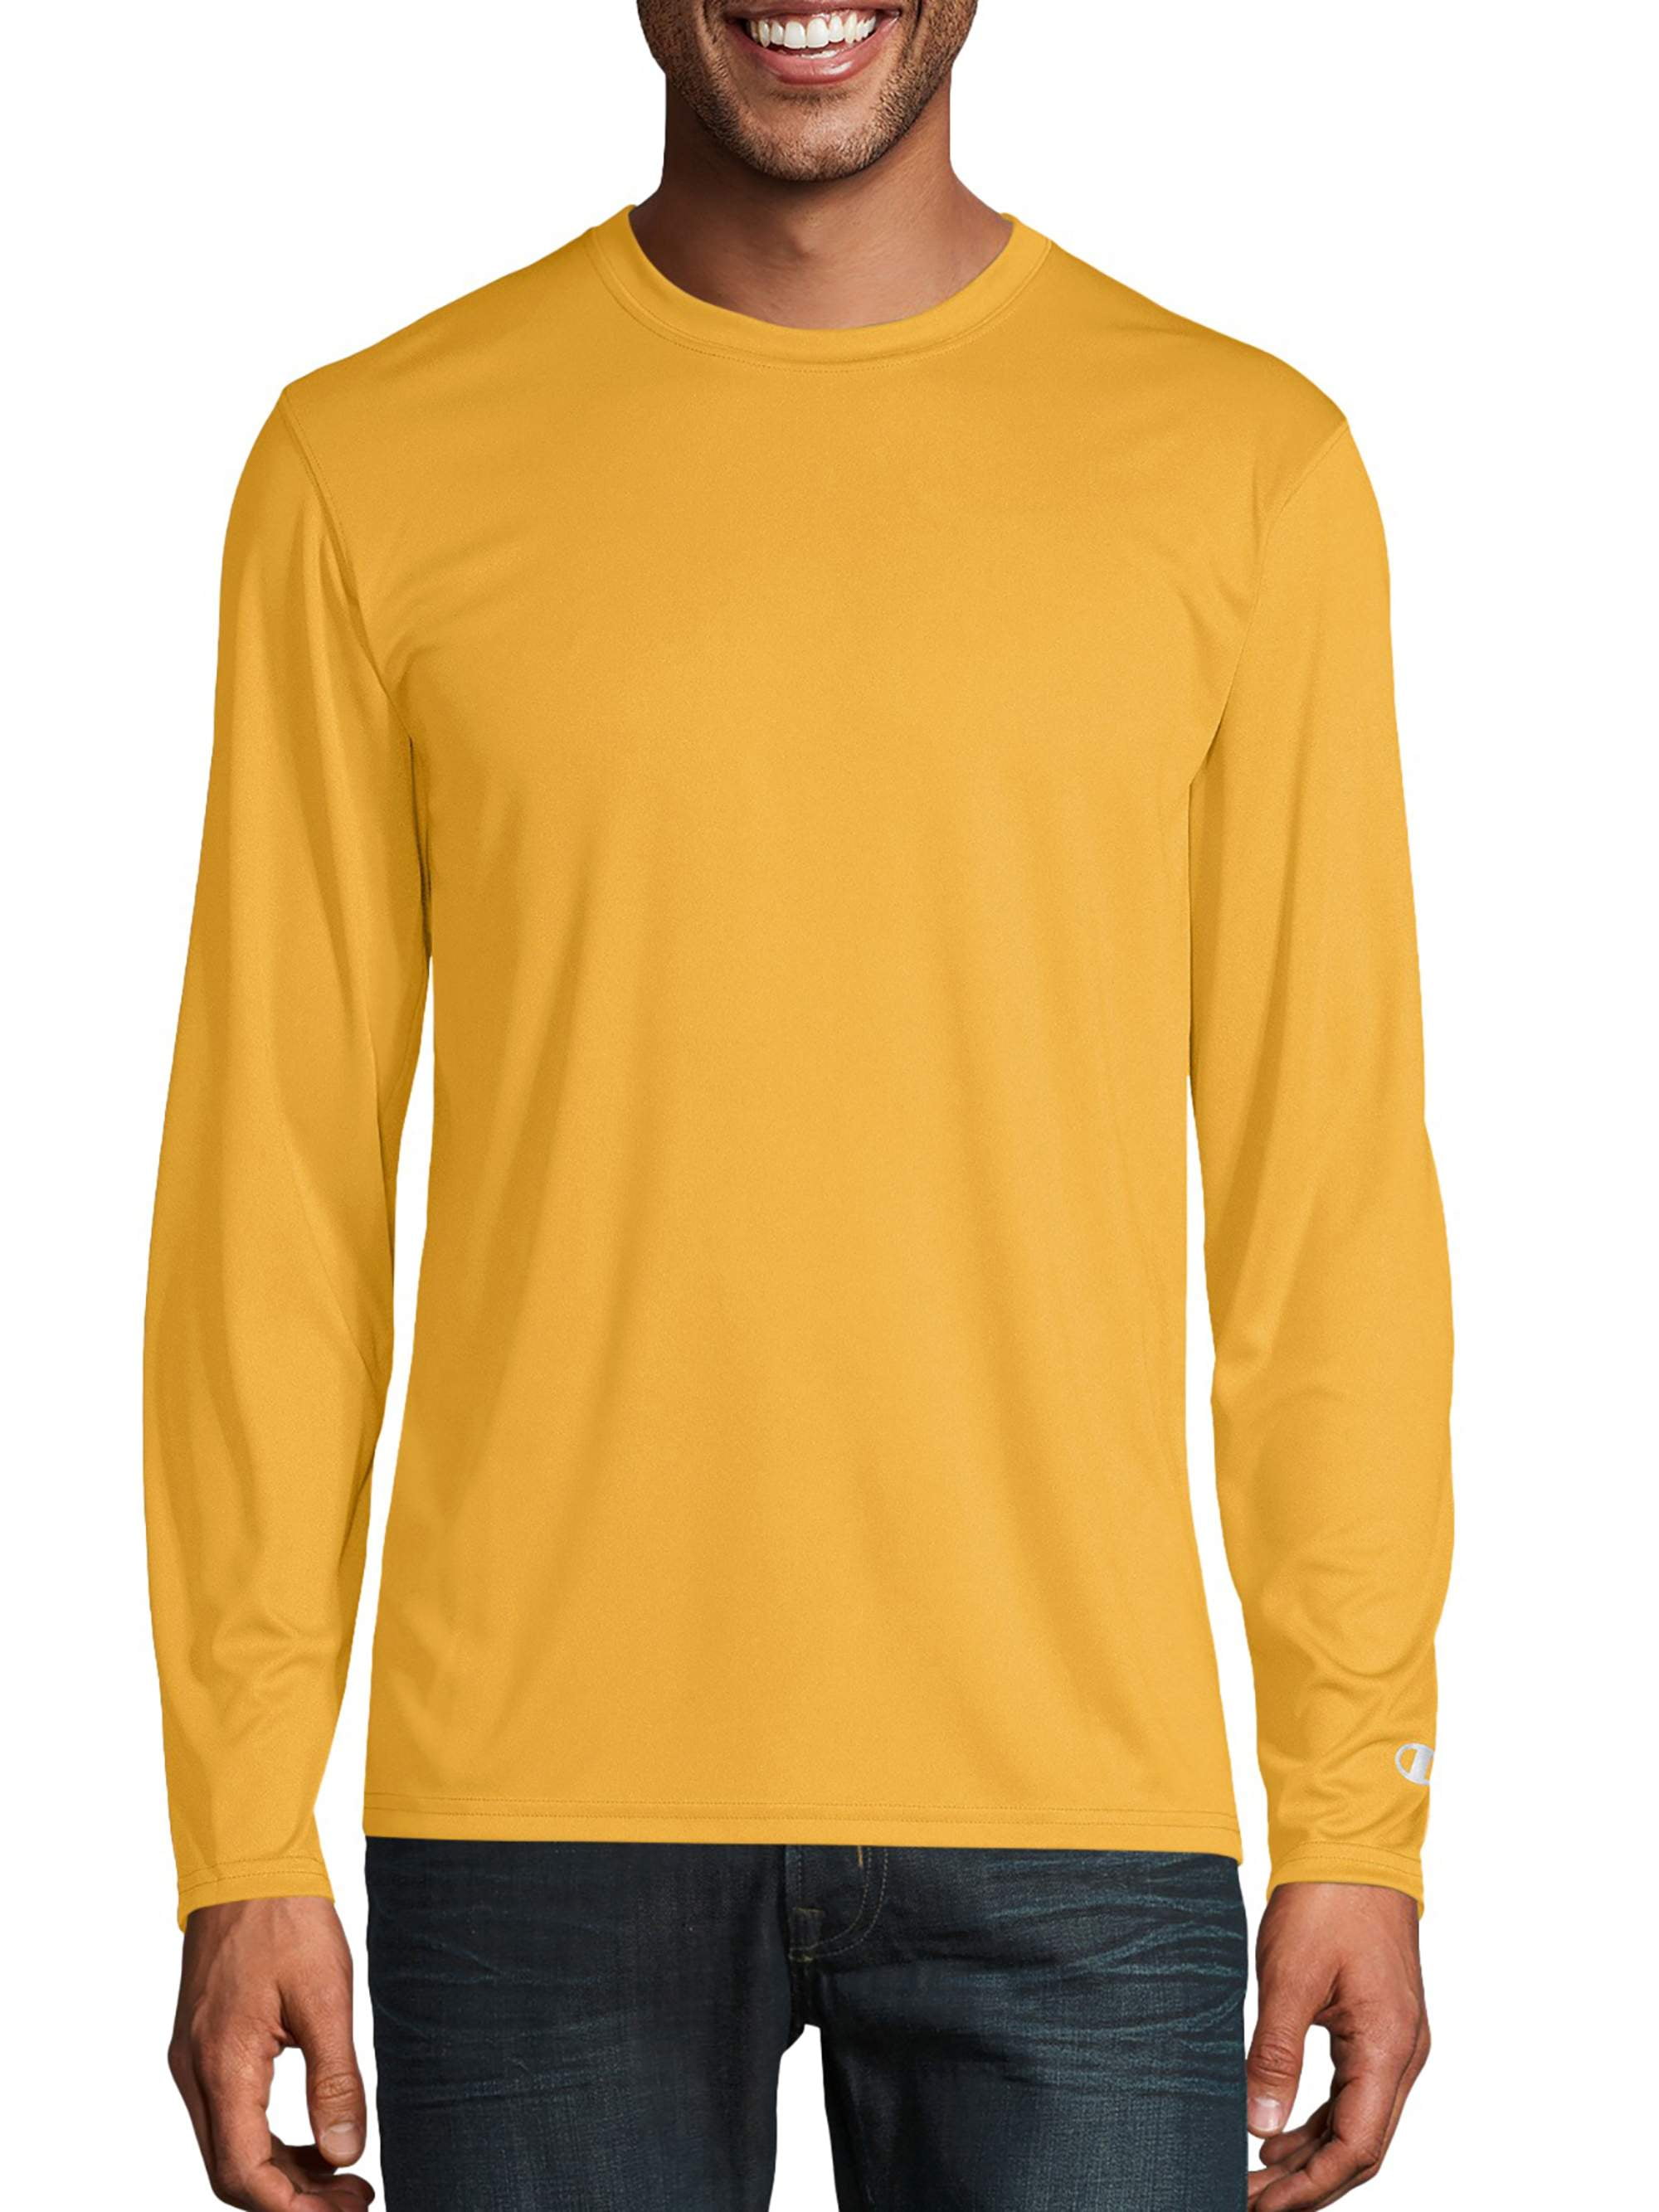 yellow long sleeve champion shirt